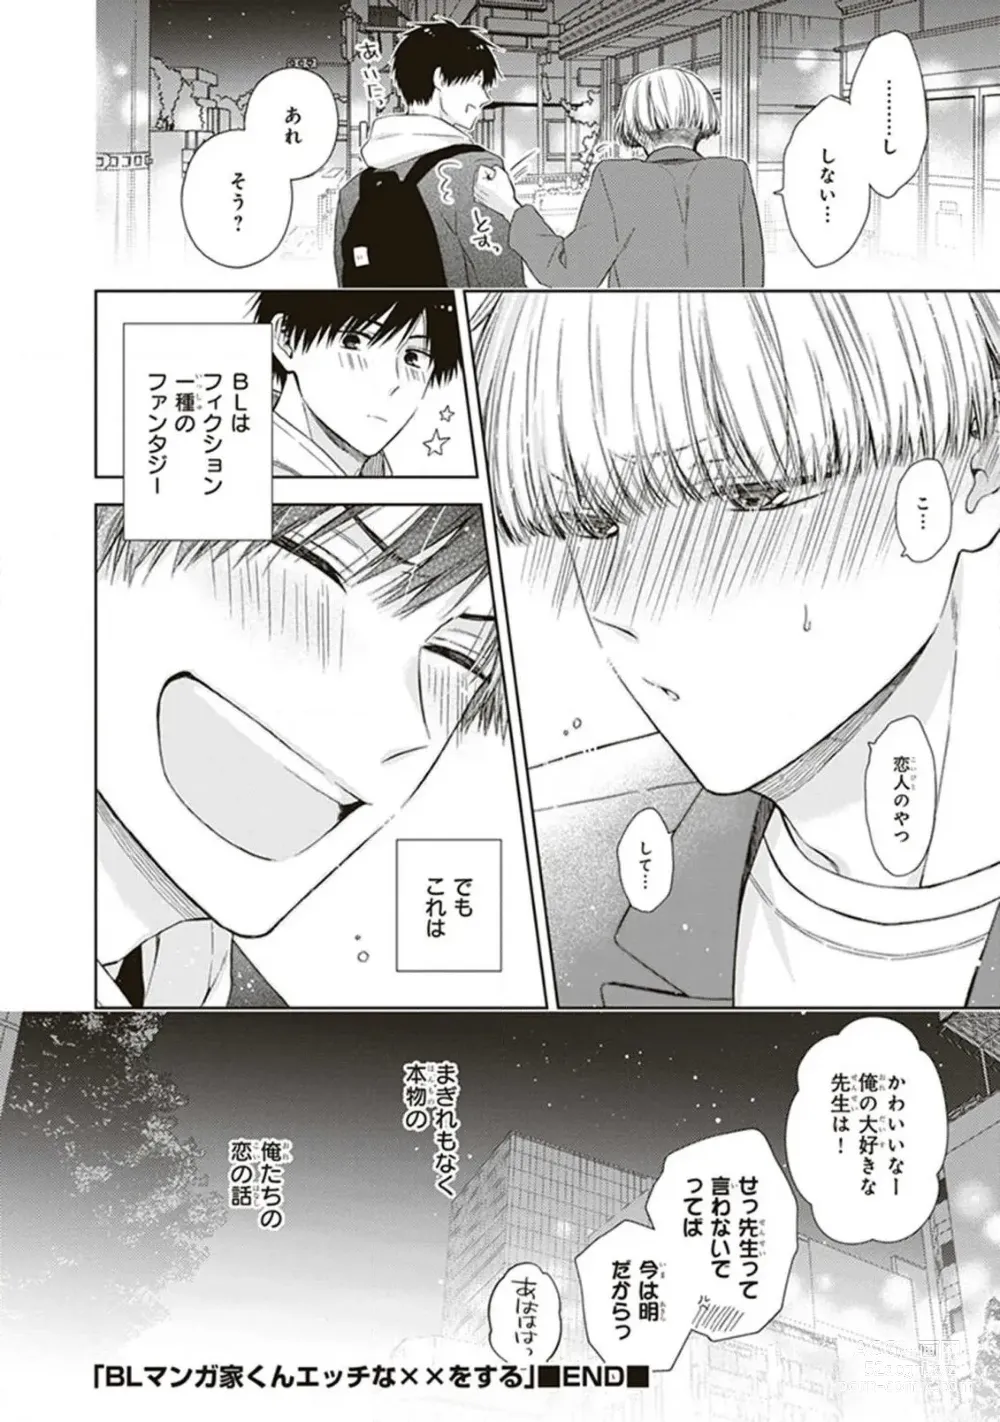 Page 150 of manga BL Mangaka-kun, Ecchi na xx o Suru